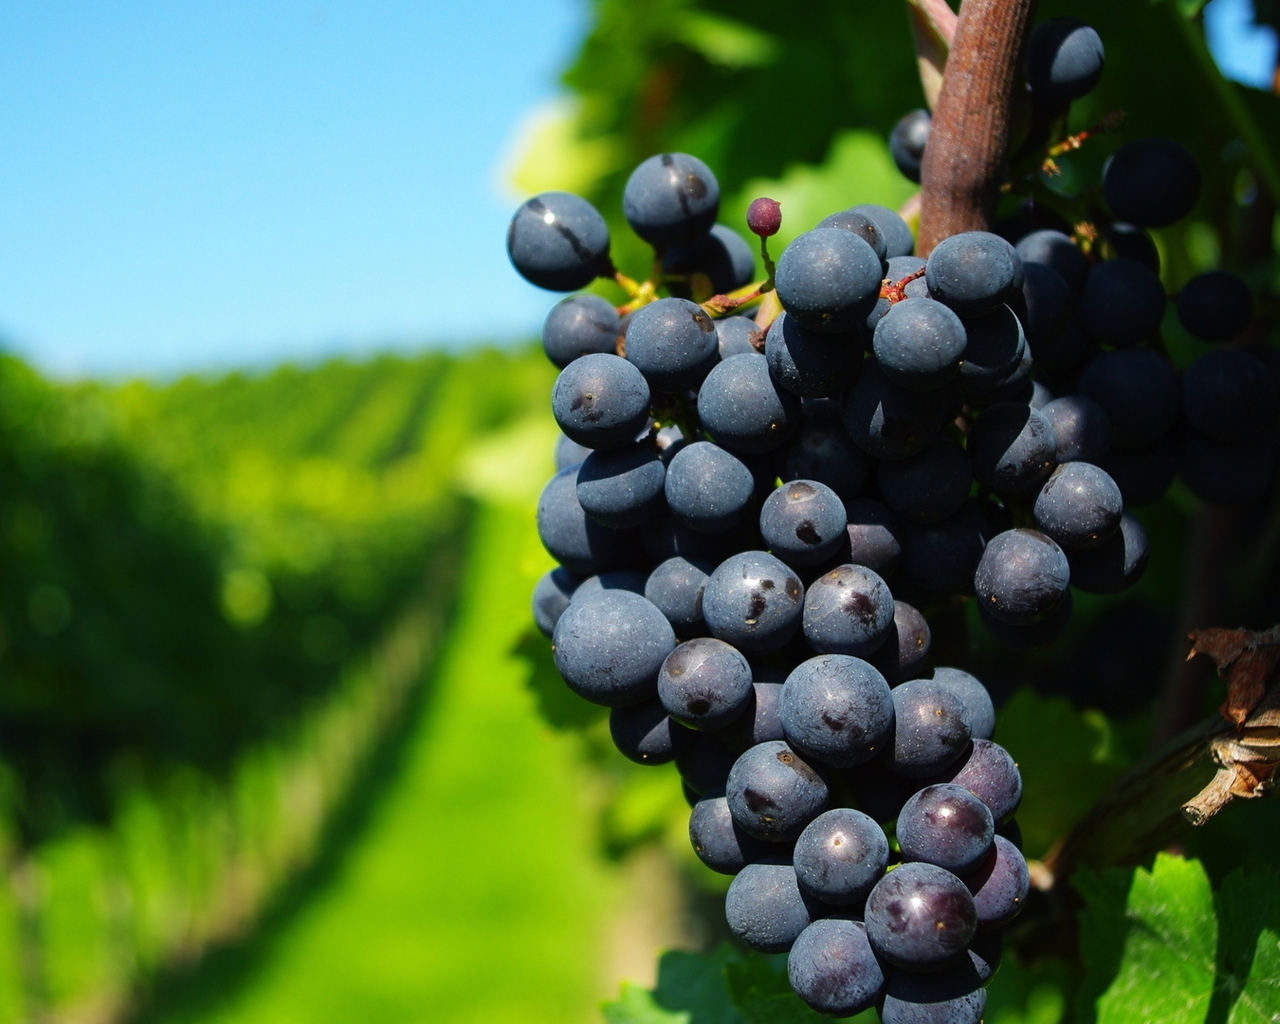 Image: Grapes, vine, bunch, fruit, vineyard, branches, greens, blurring